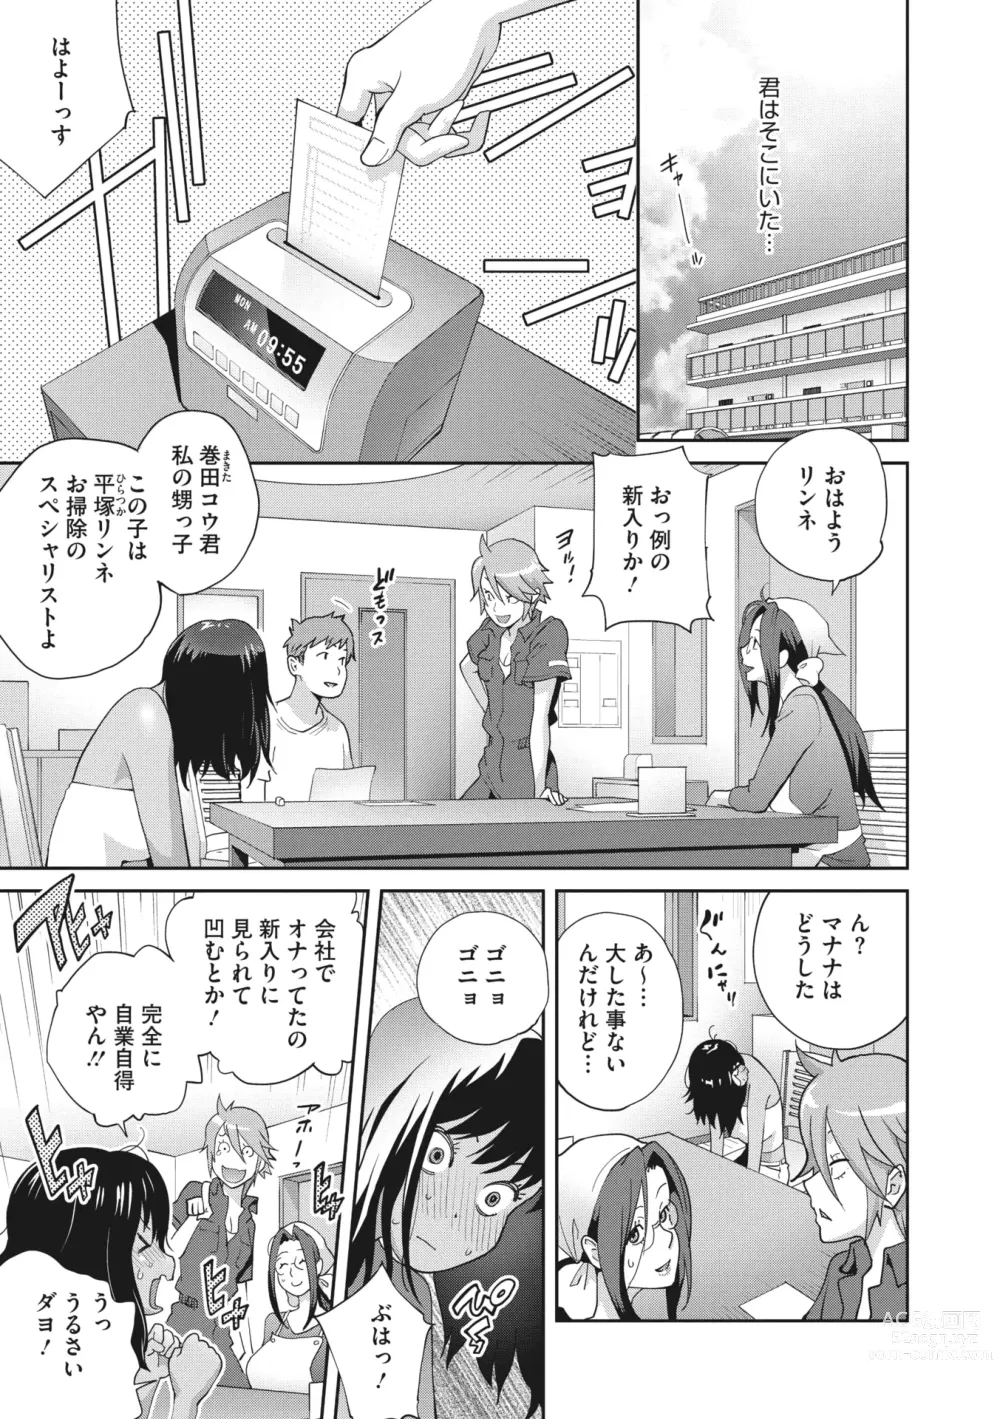 Page 3 of manga Kimama Tawawa Manana 1-4